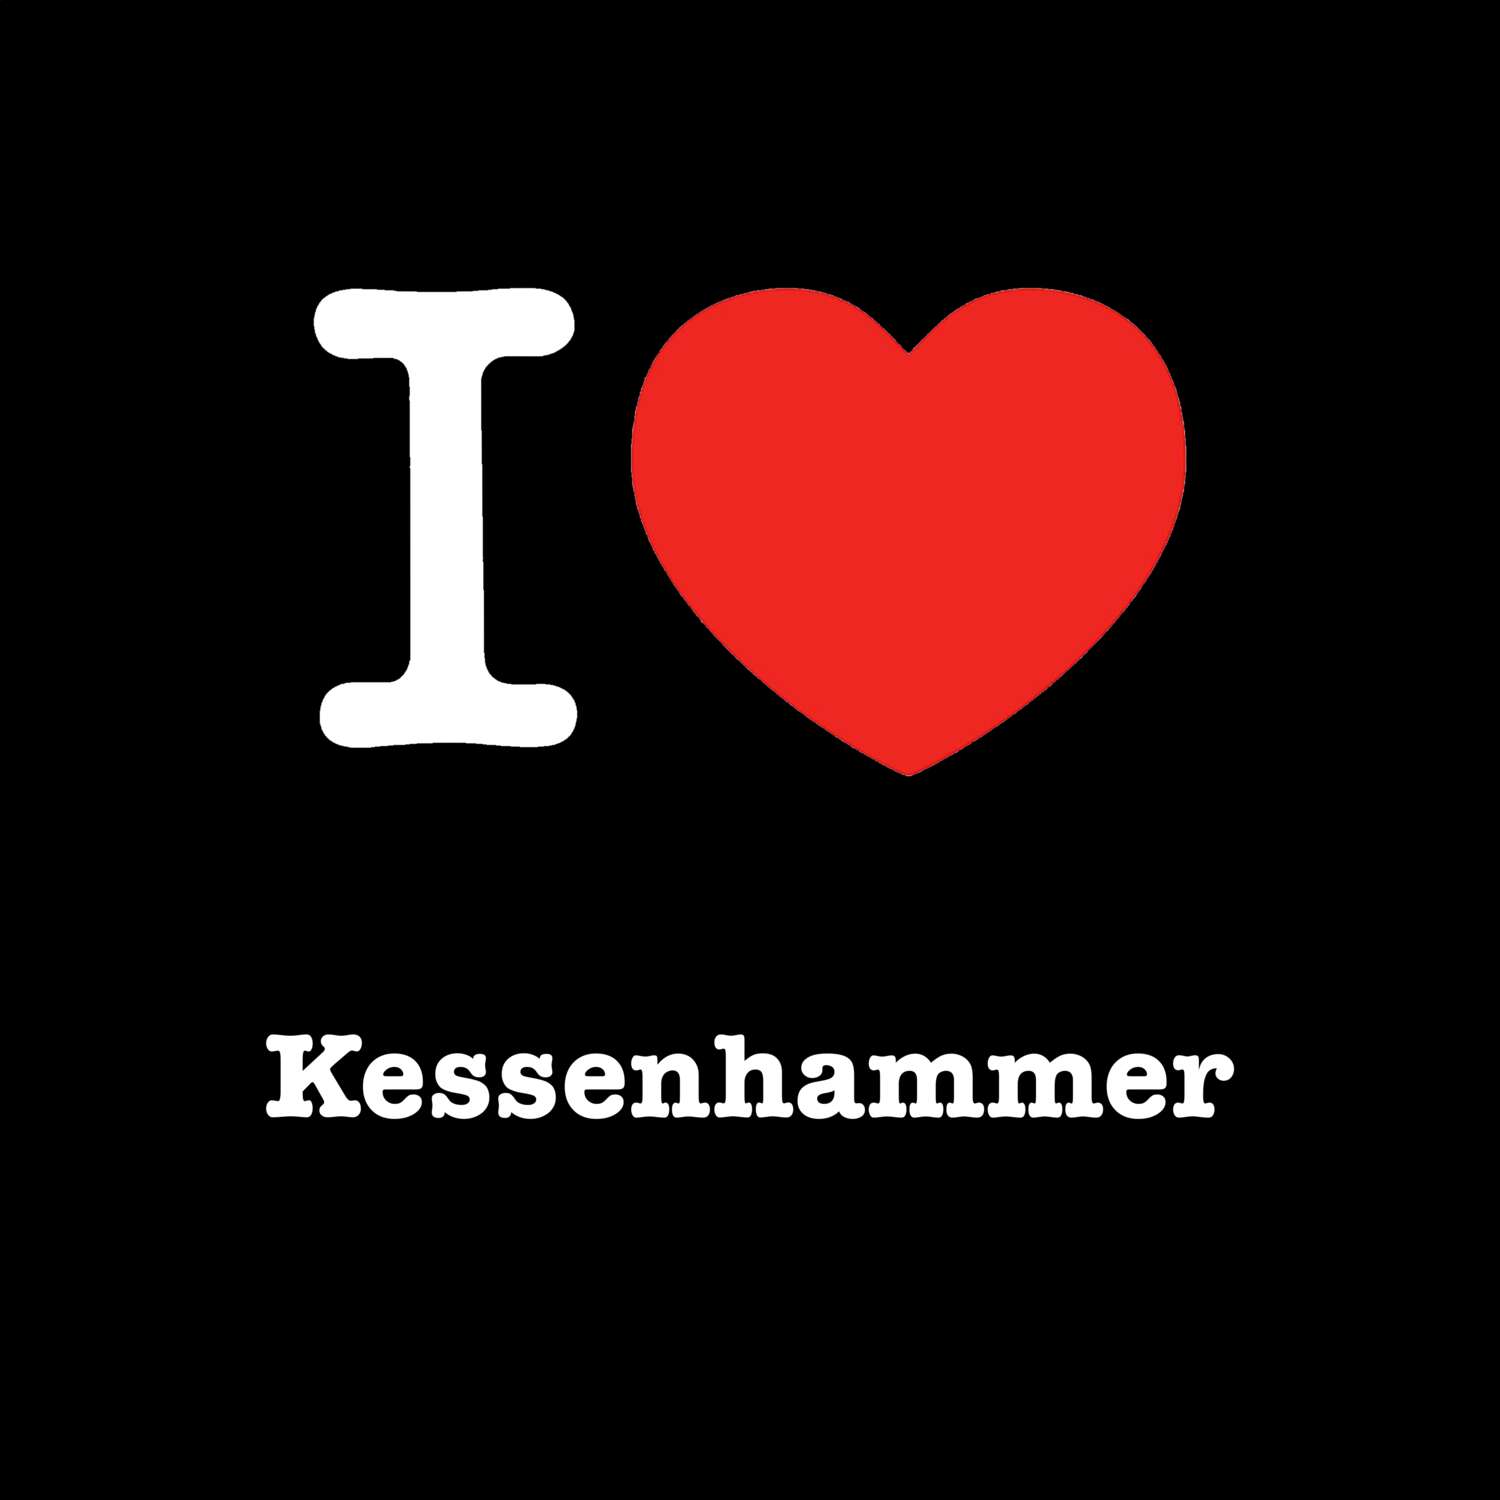 Kessenhammer T-Shirt »I love«